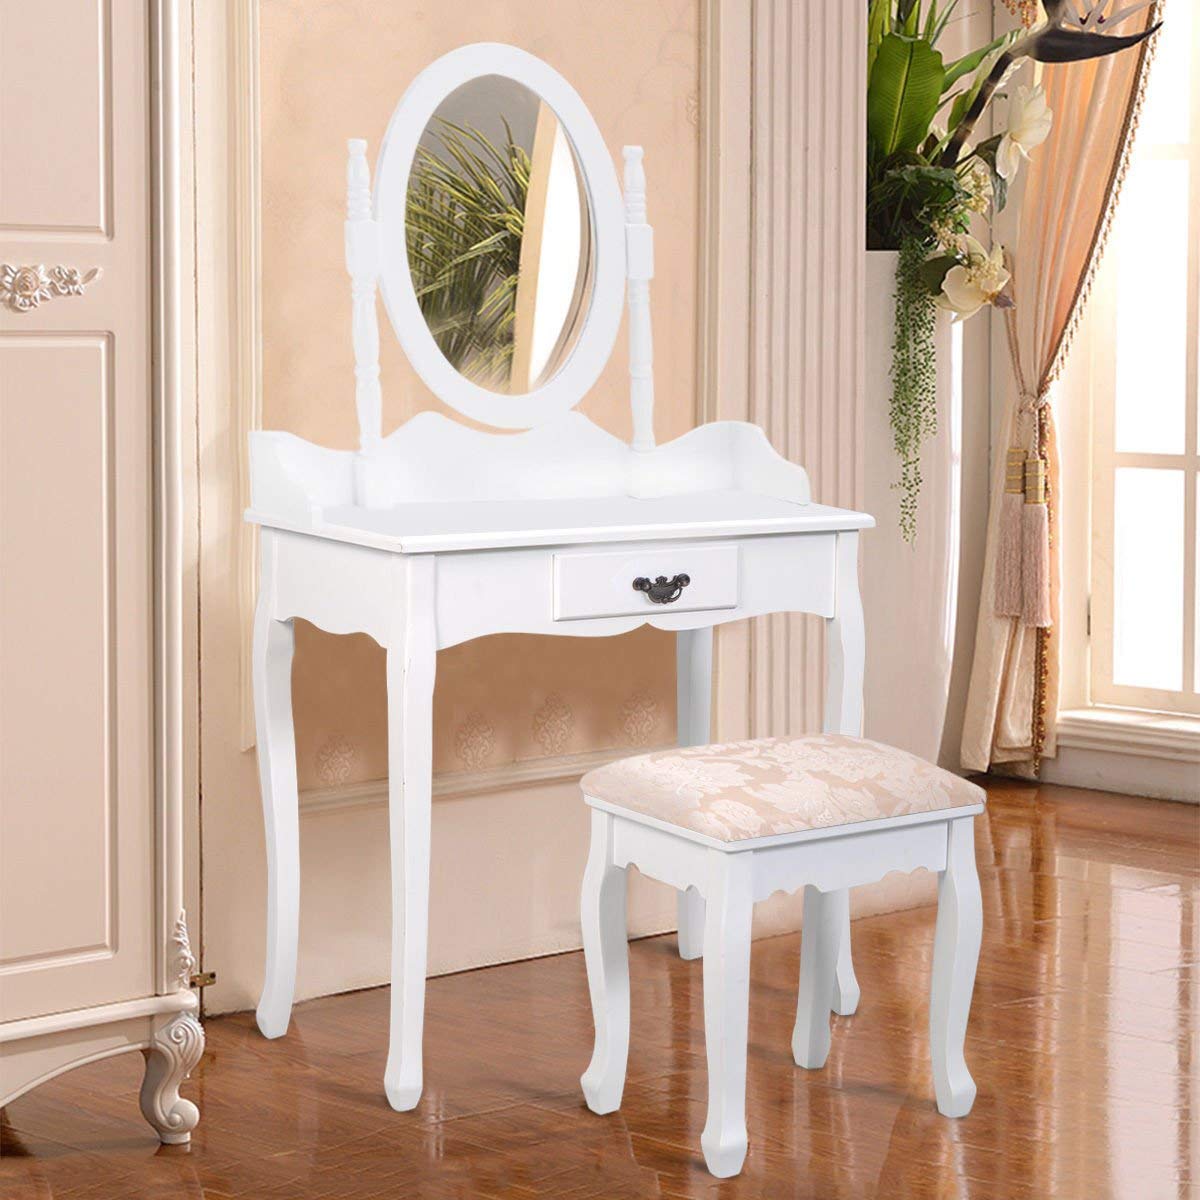 Dressing table amazon.com: Giantex bathroom dressing table set with mirror-padded stool make-up dressing LIJTPUE